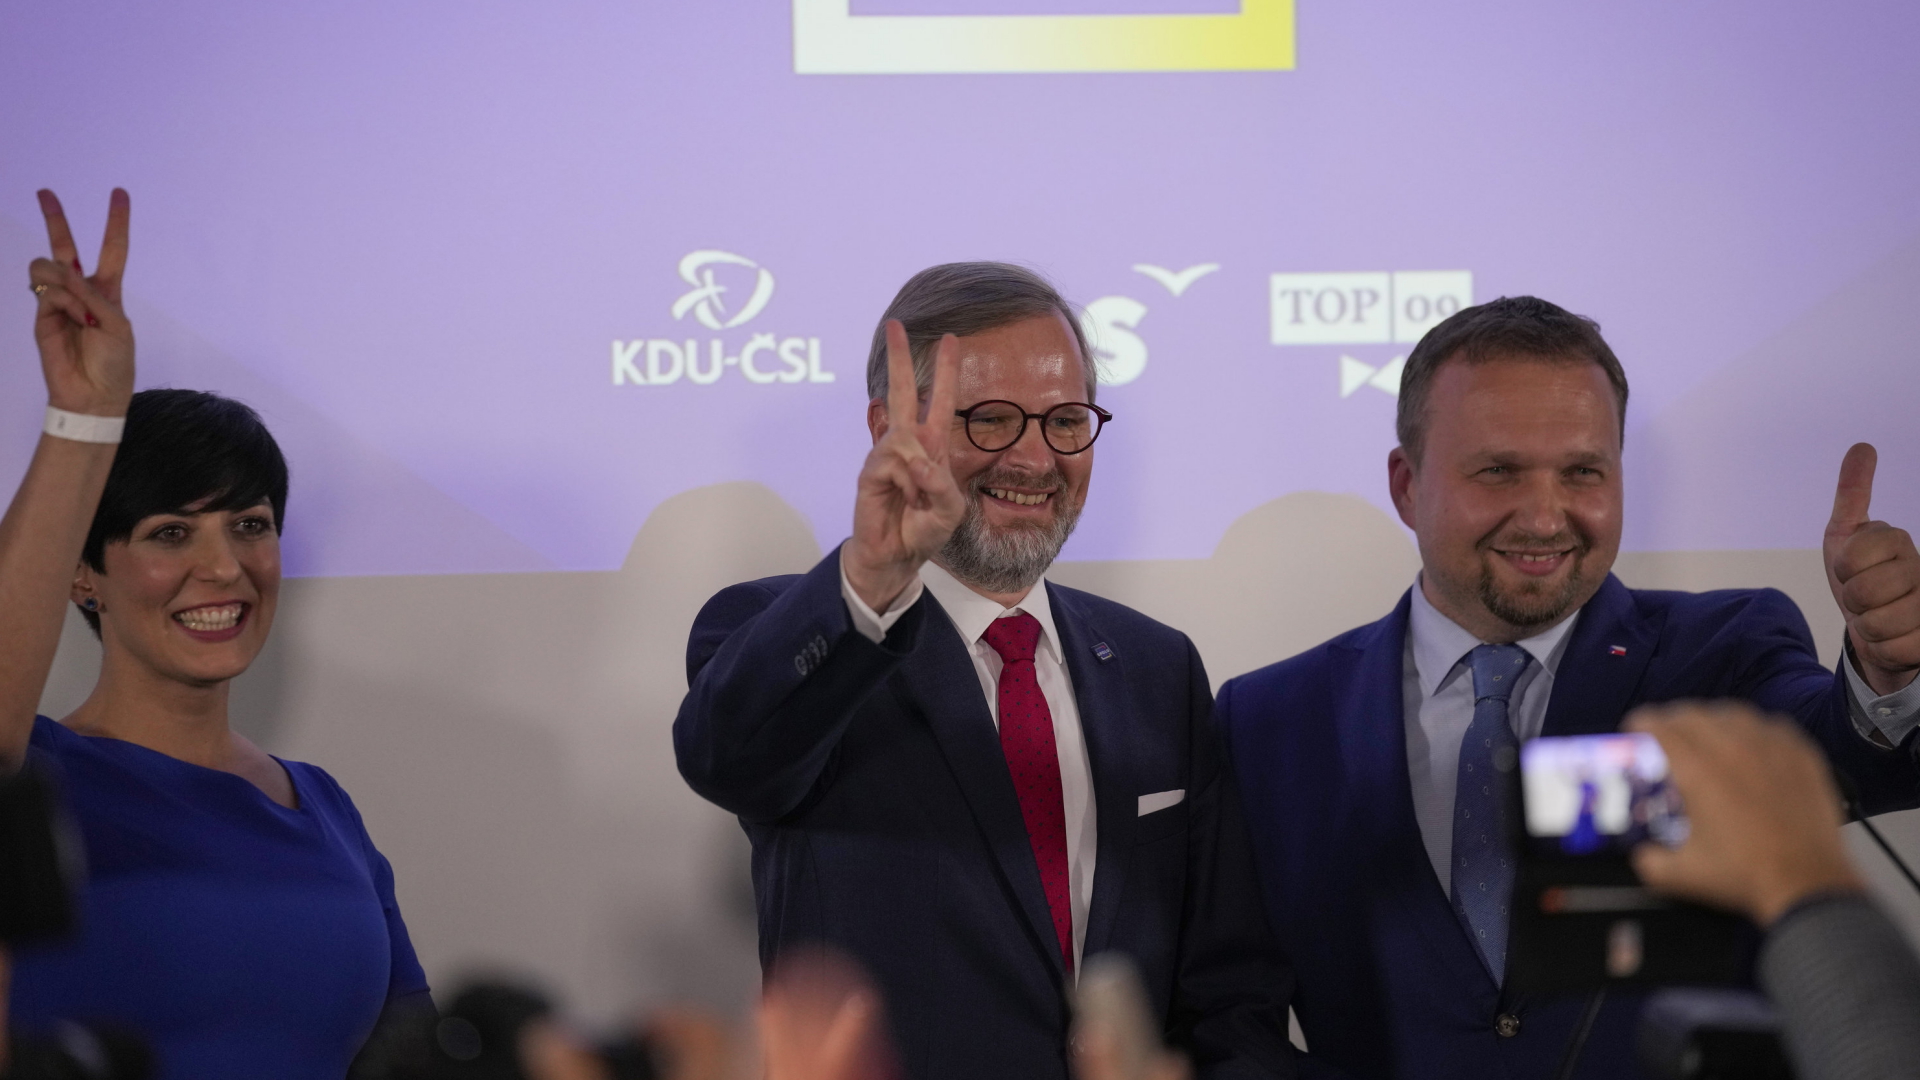 Oppositionspolitiker in Tschechien, darunter Spolu-Spitzenkandidat Petr Fiala (Mitte). | AP